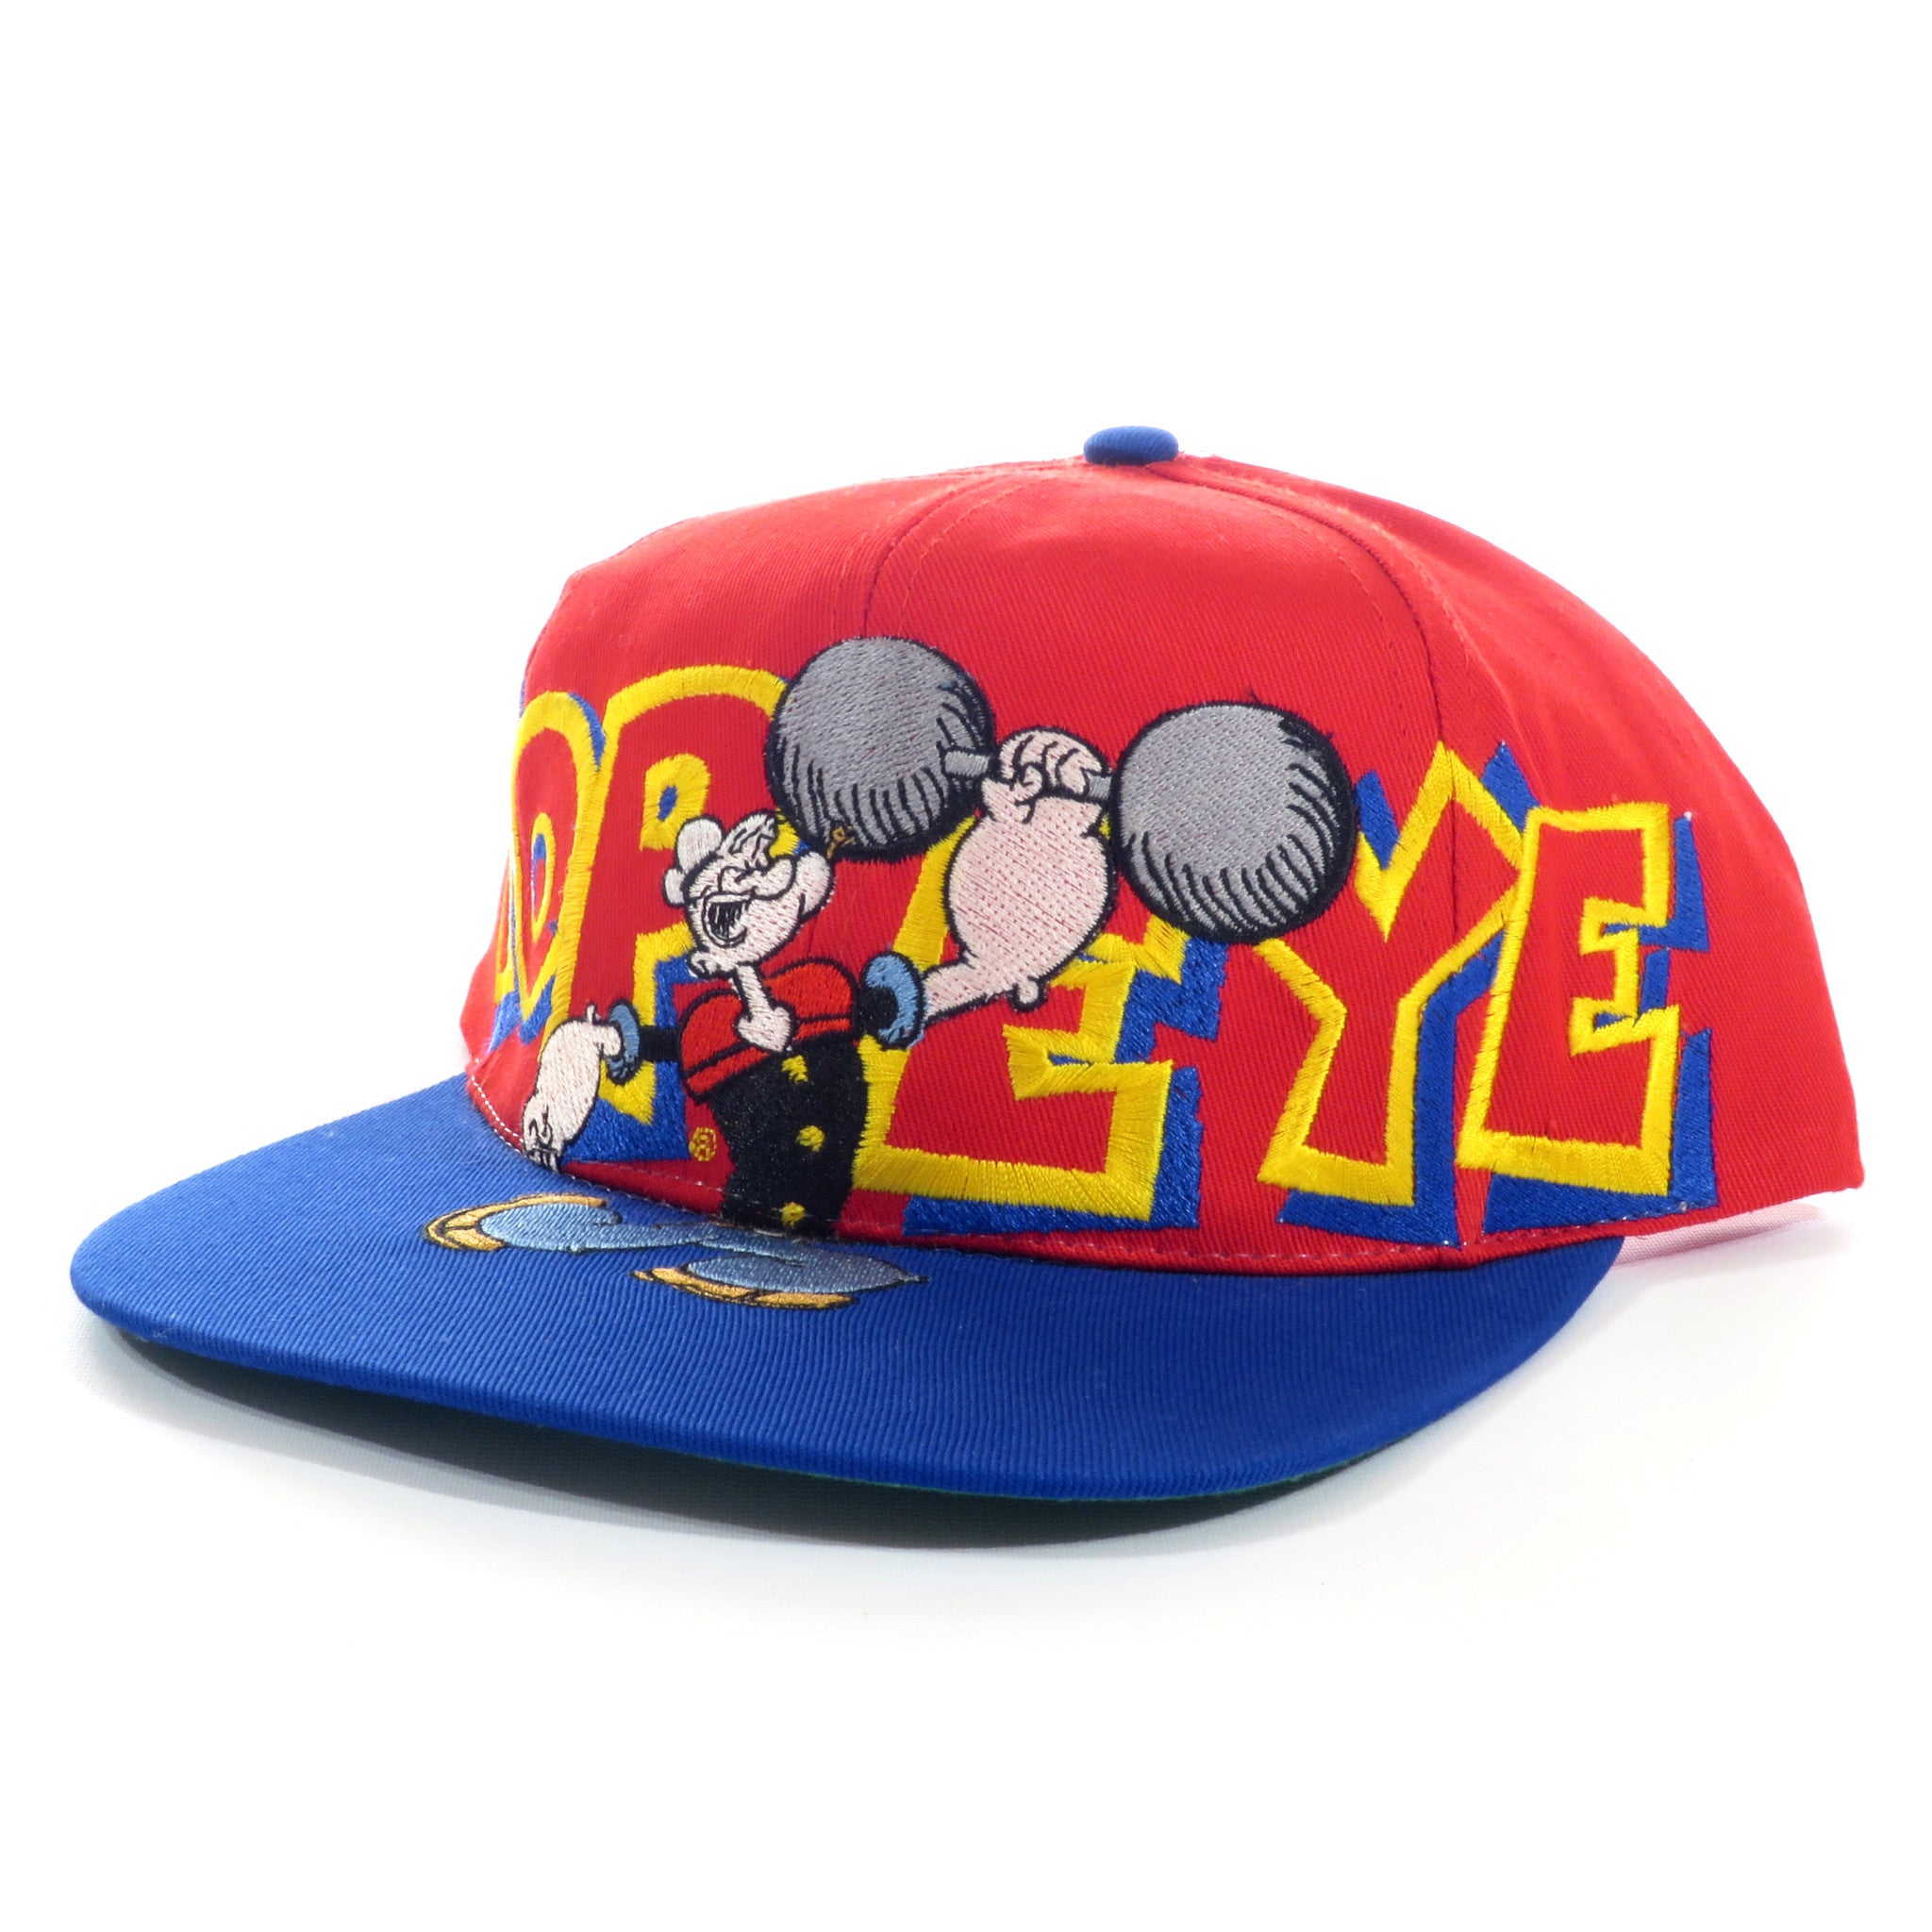 Popeye The Sailor Man Snapback Hat